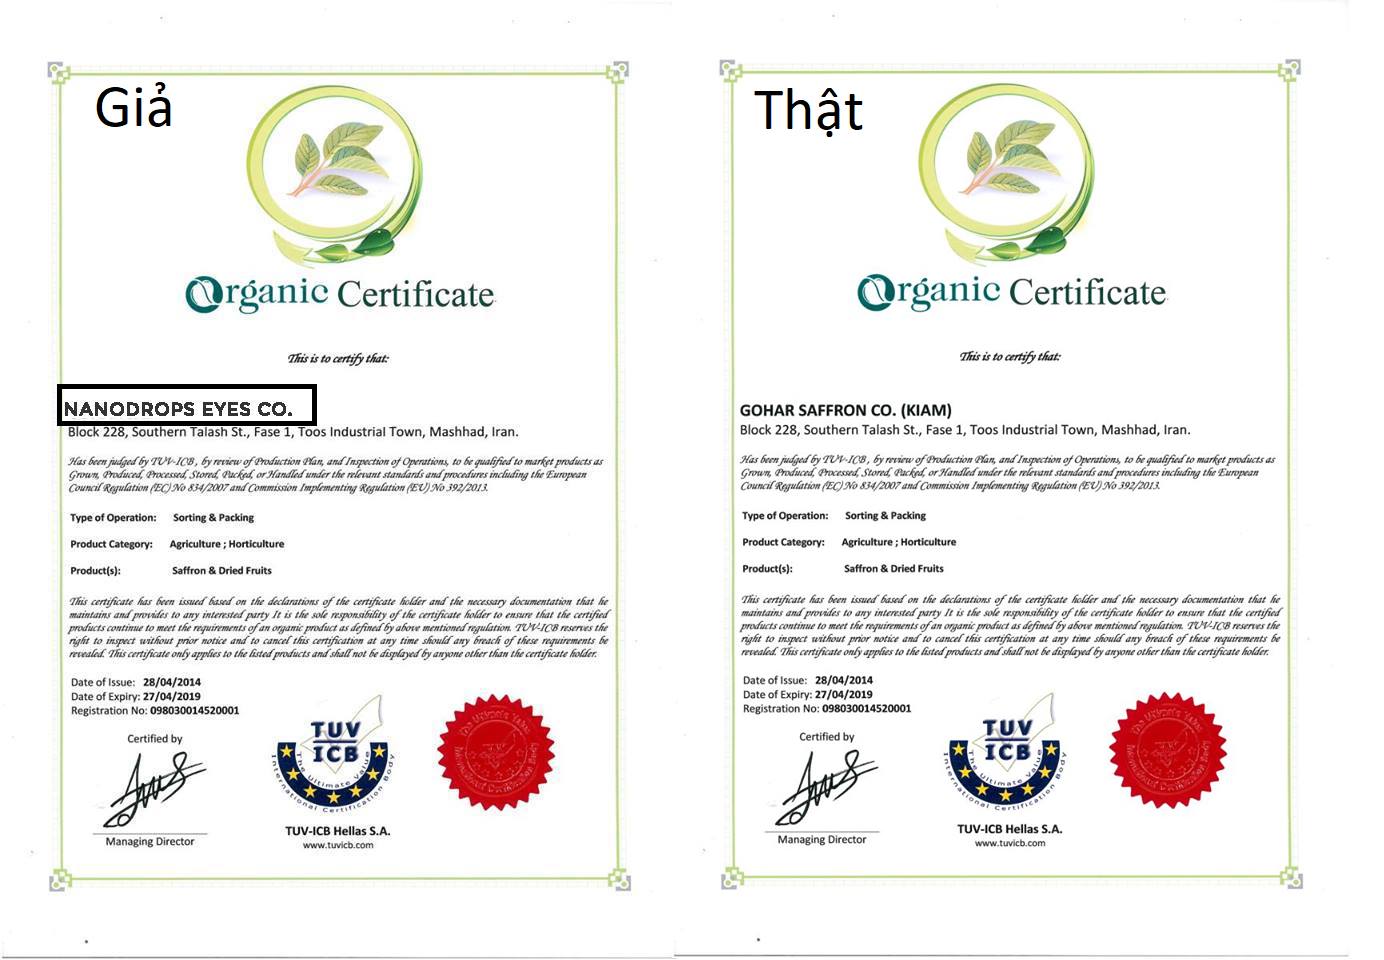 Chứng nhận Organic từ TUV-ICB Hellas S.A.